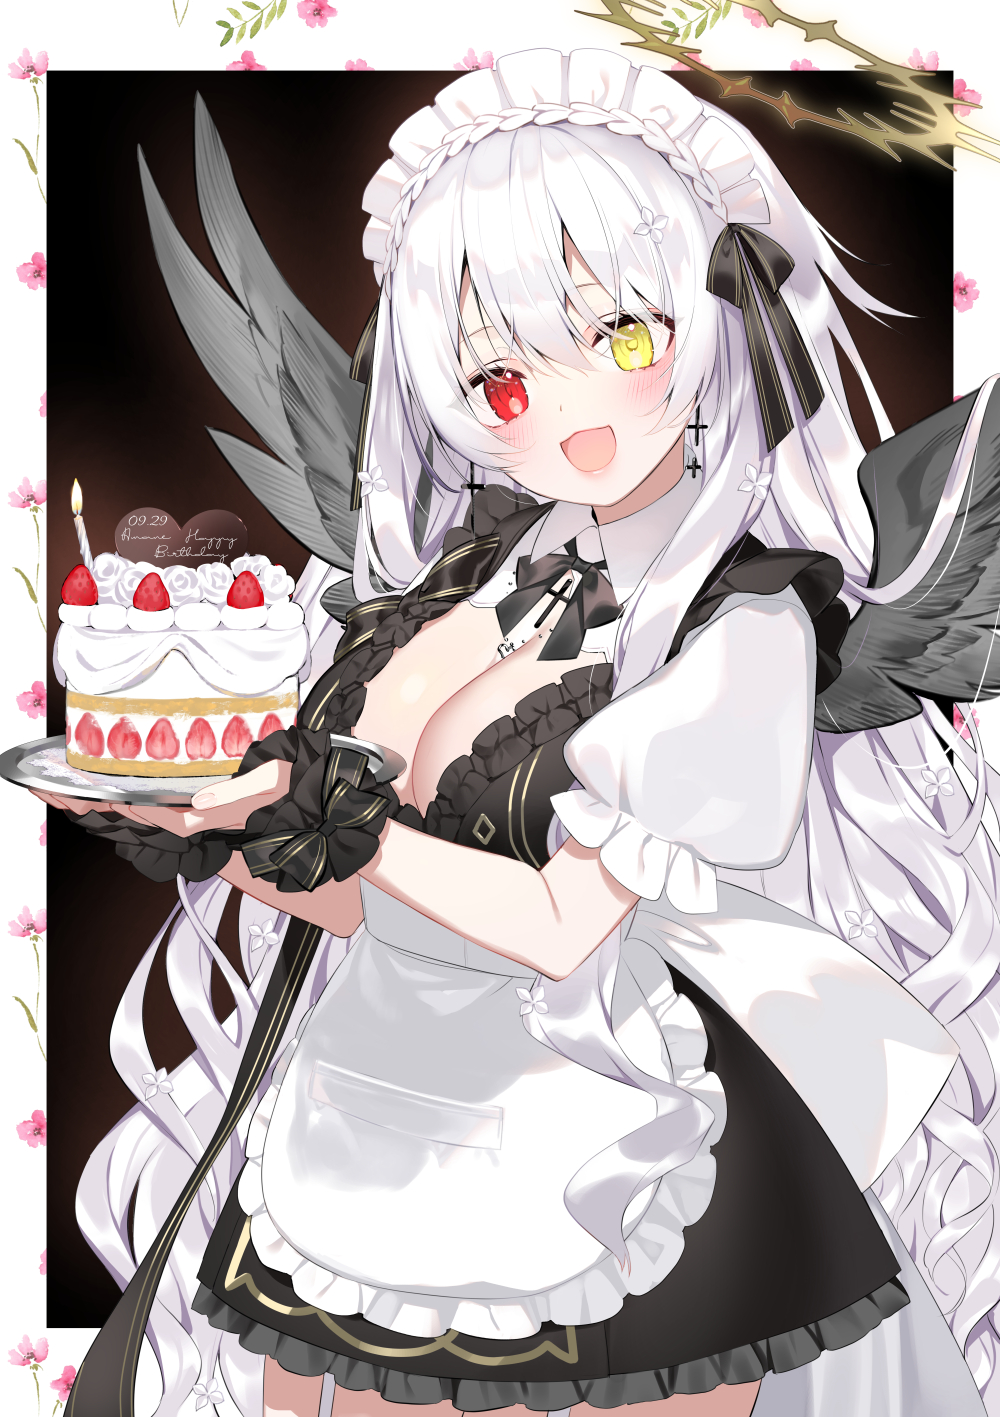 Anime 1000x1417 anime girls anime heterochromia maid maid outfit cake cleavage white hair